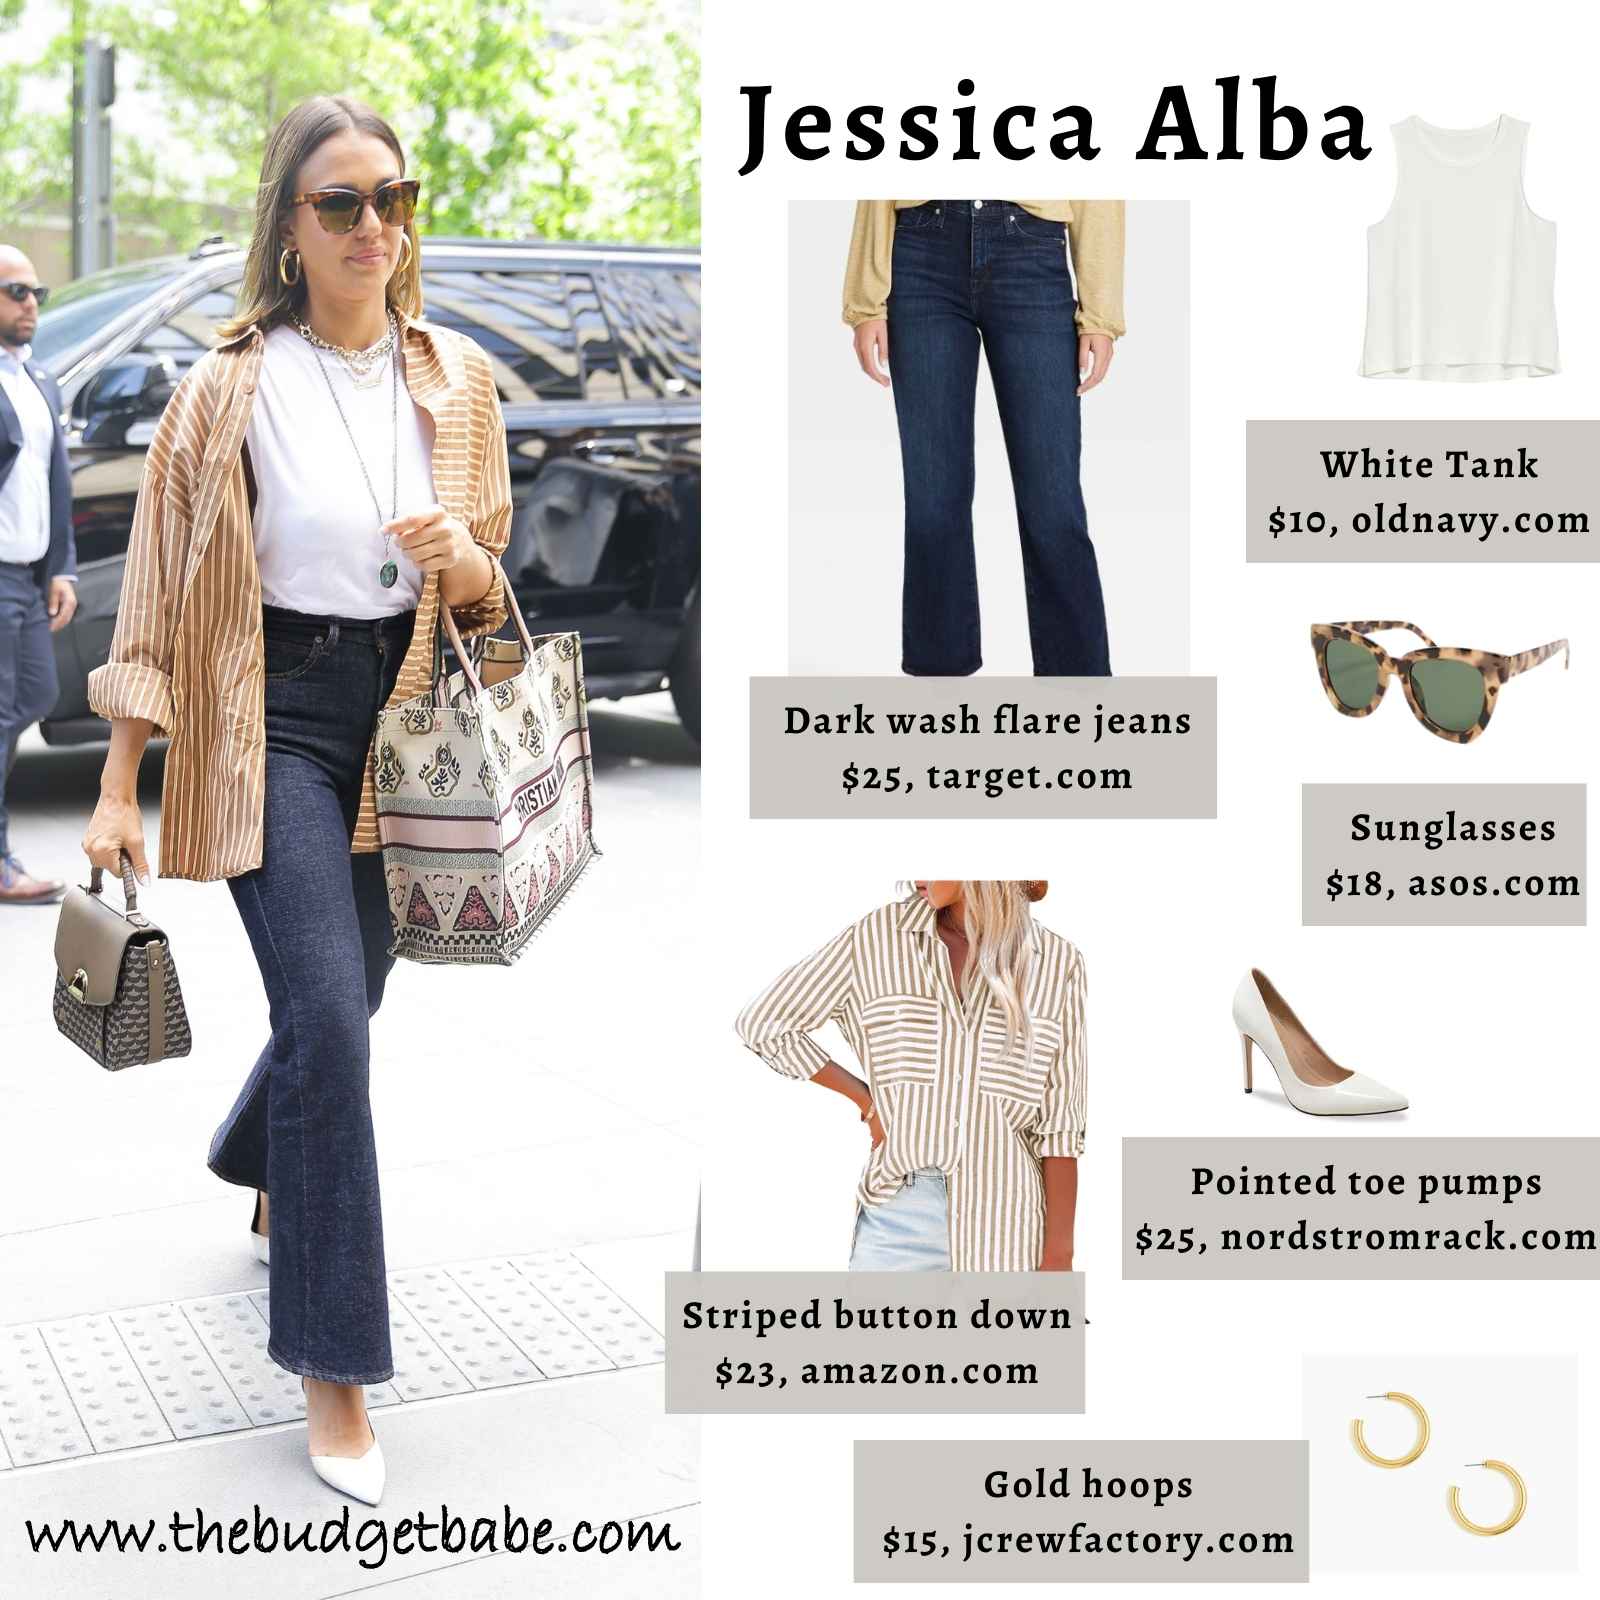 Jessica Alba's stripe button down, darkwash jeans look for less